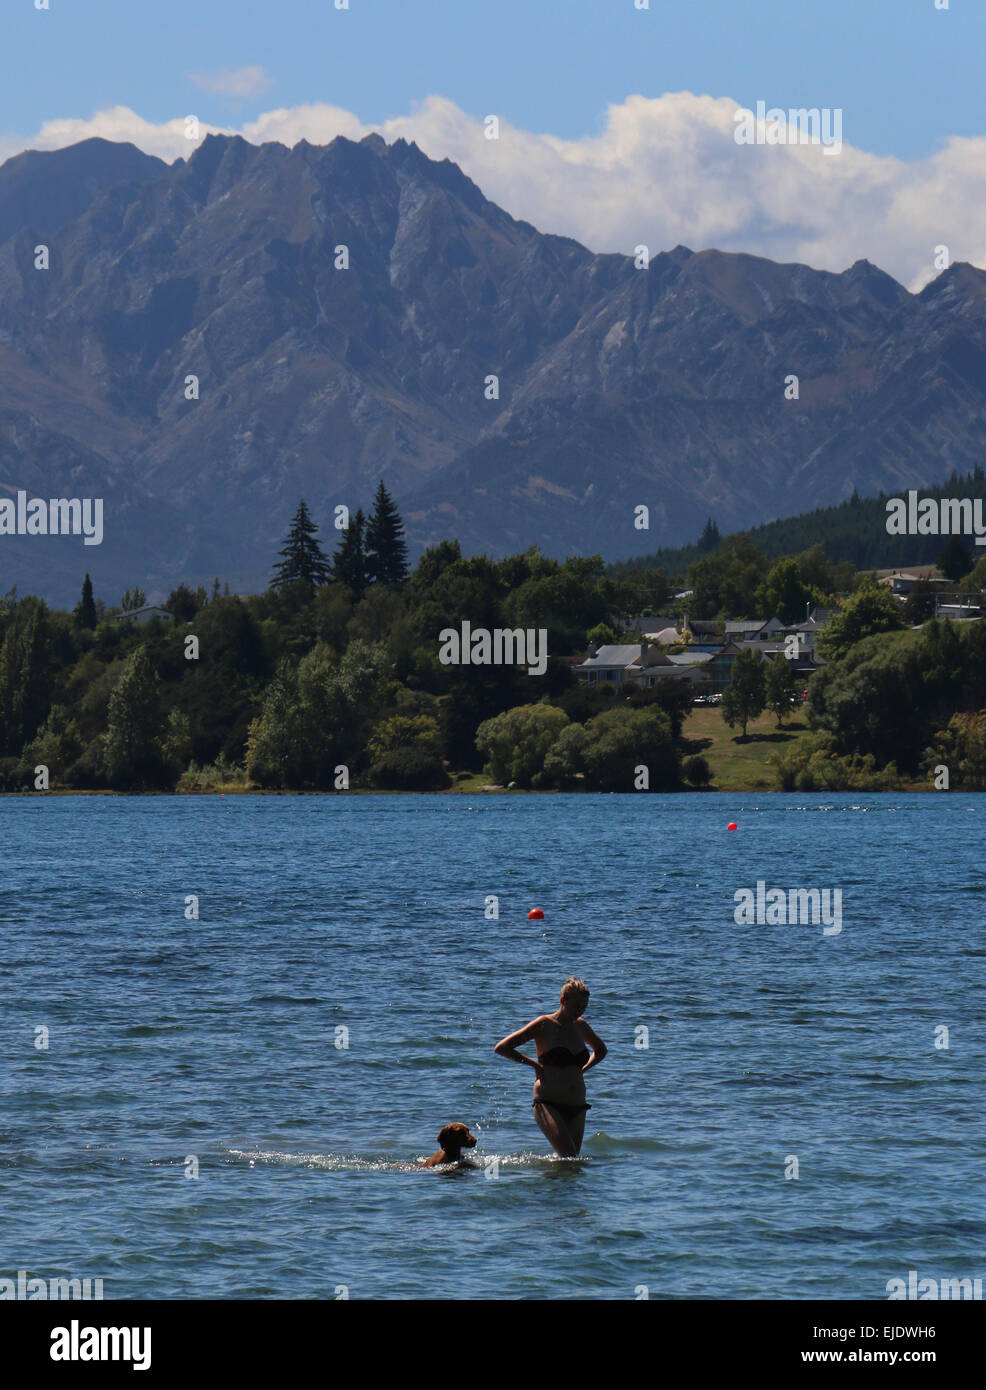 Frau mit Hund am See Wanaka, Region Otago Seen Wanaka Neuseeland schwimmen Stockfoto